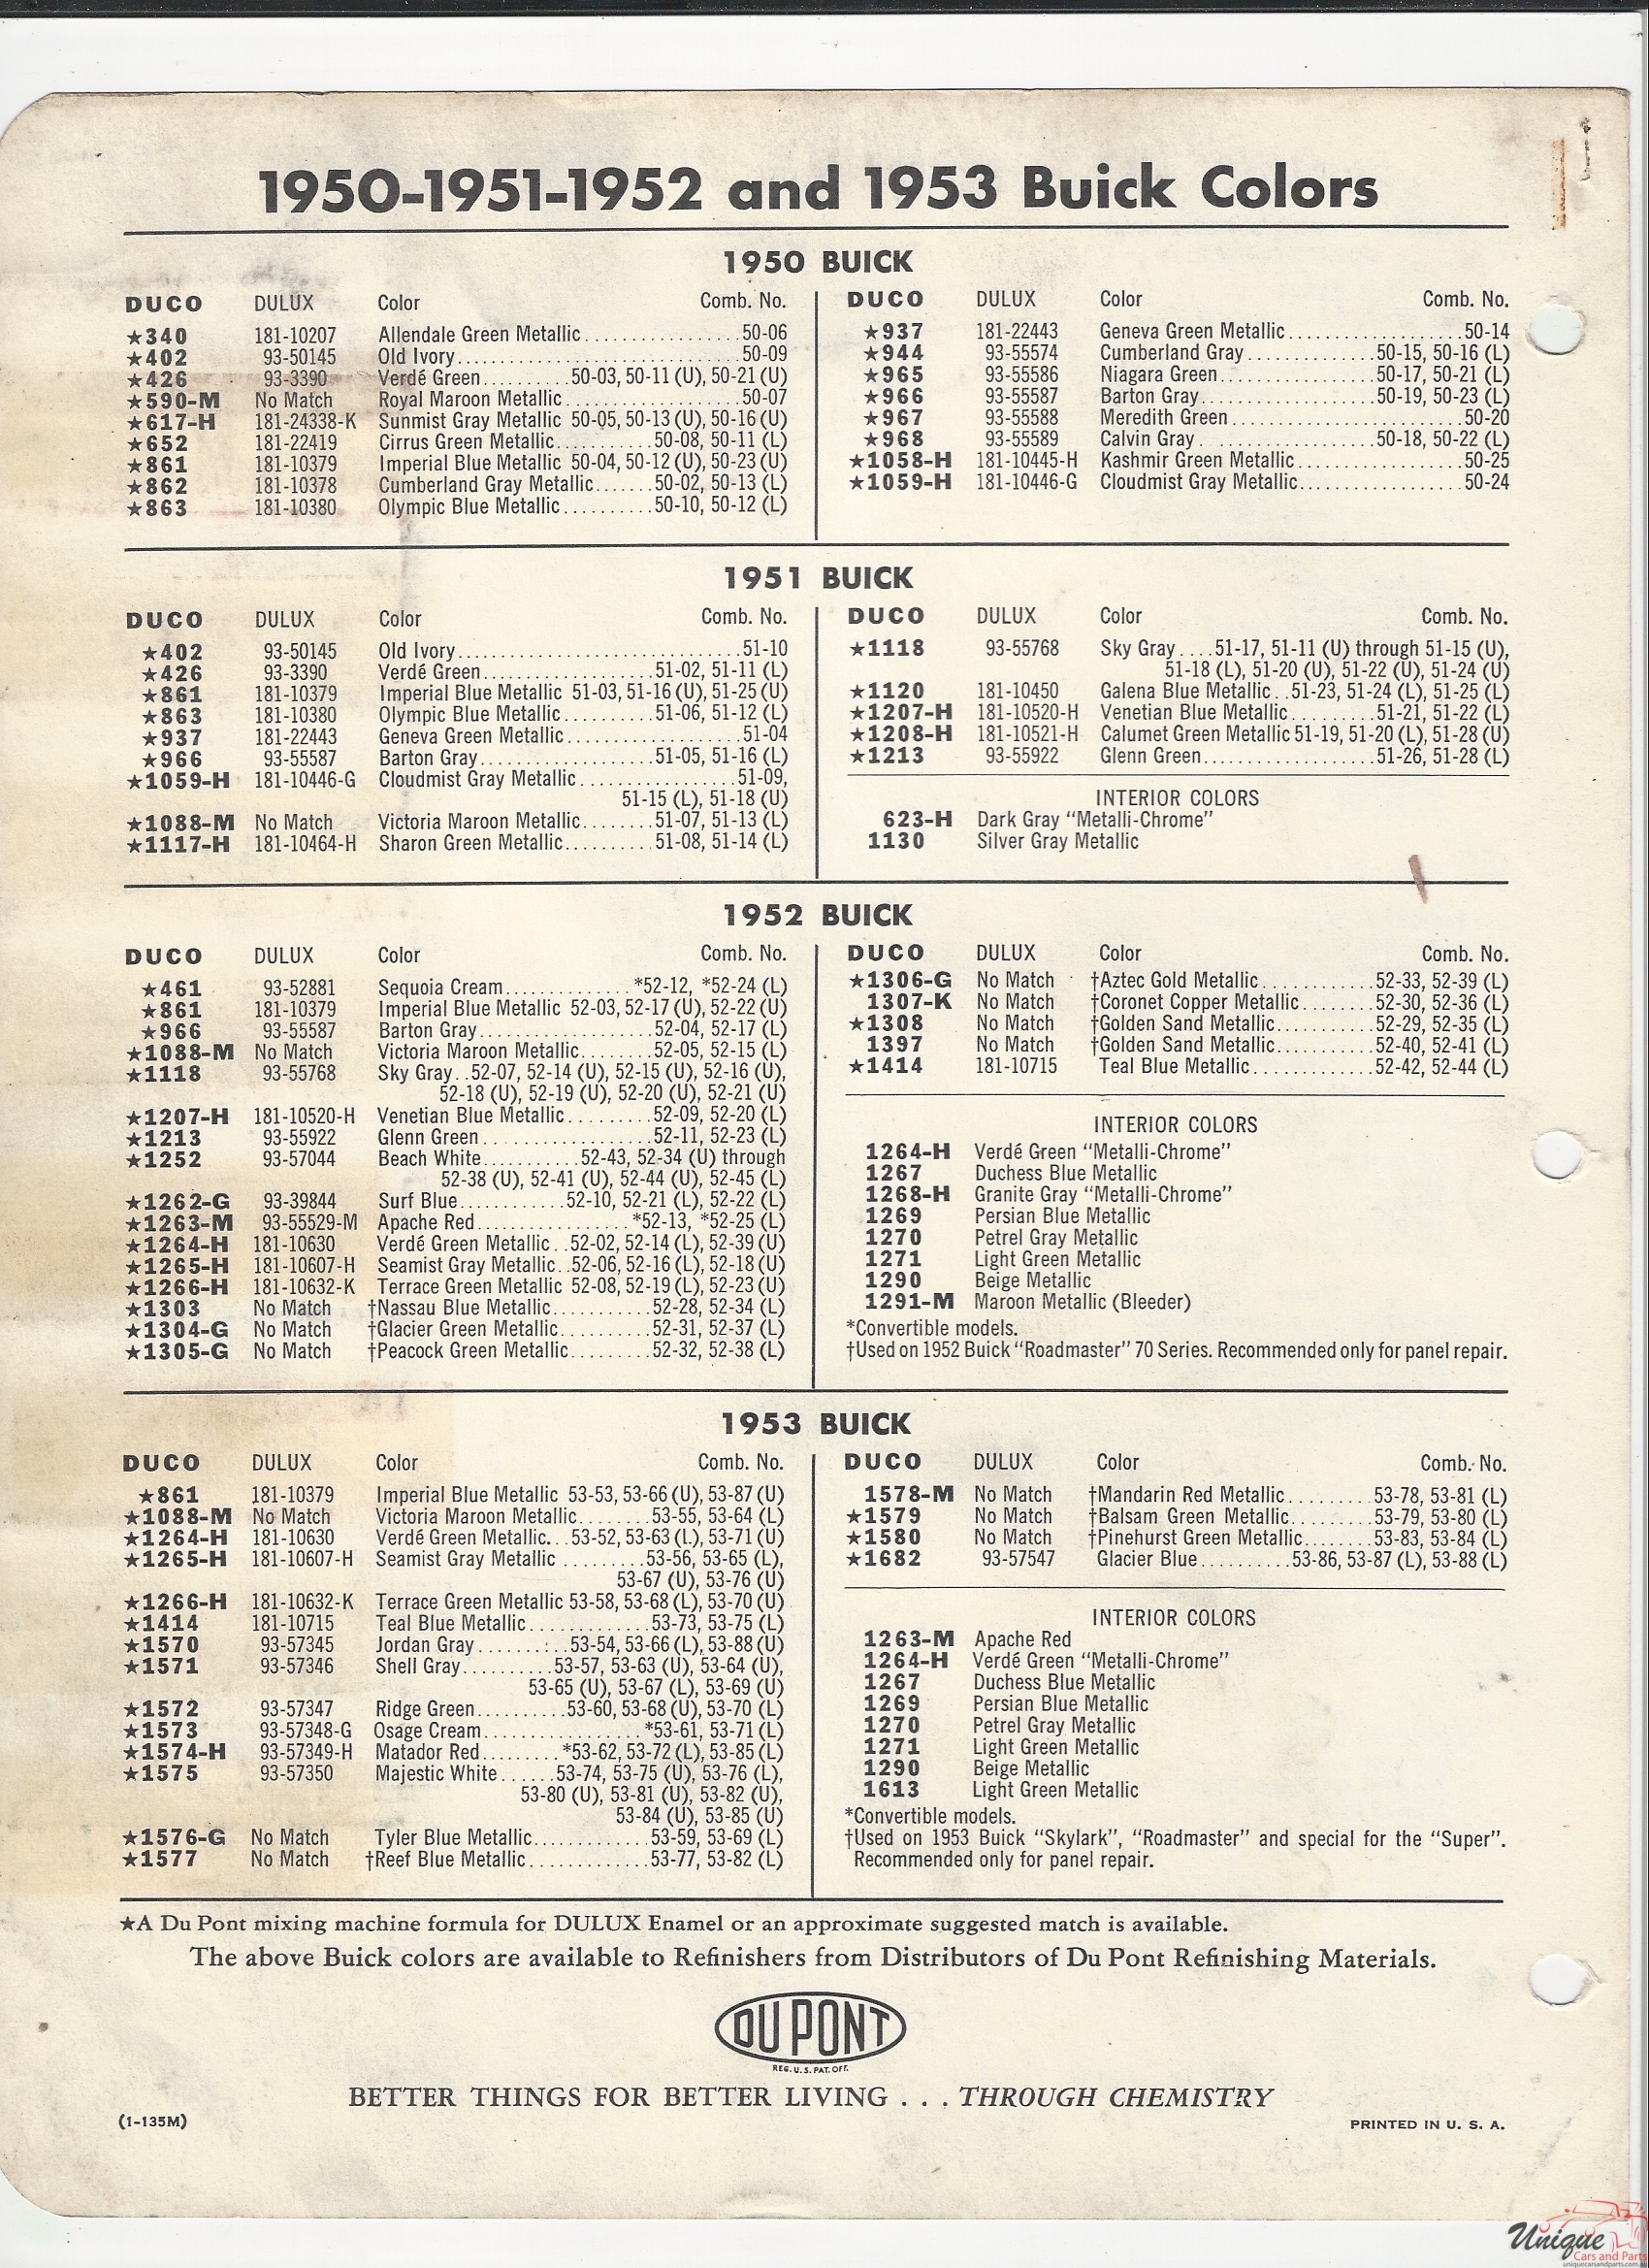 1954 Buick-3 Paint Charts